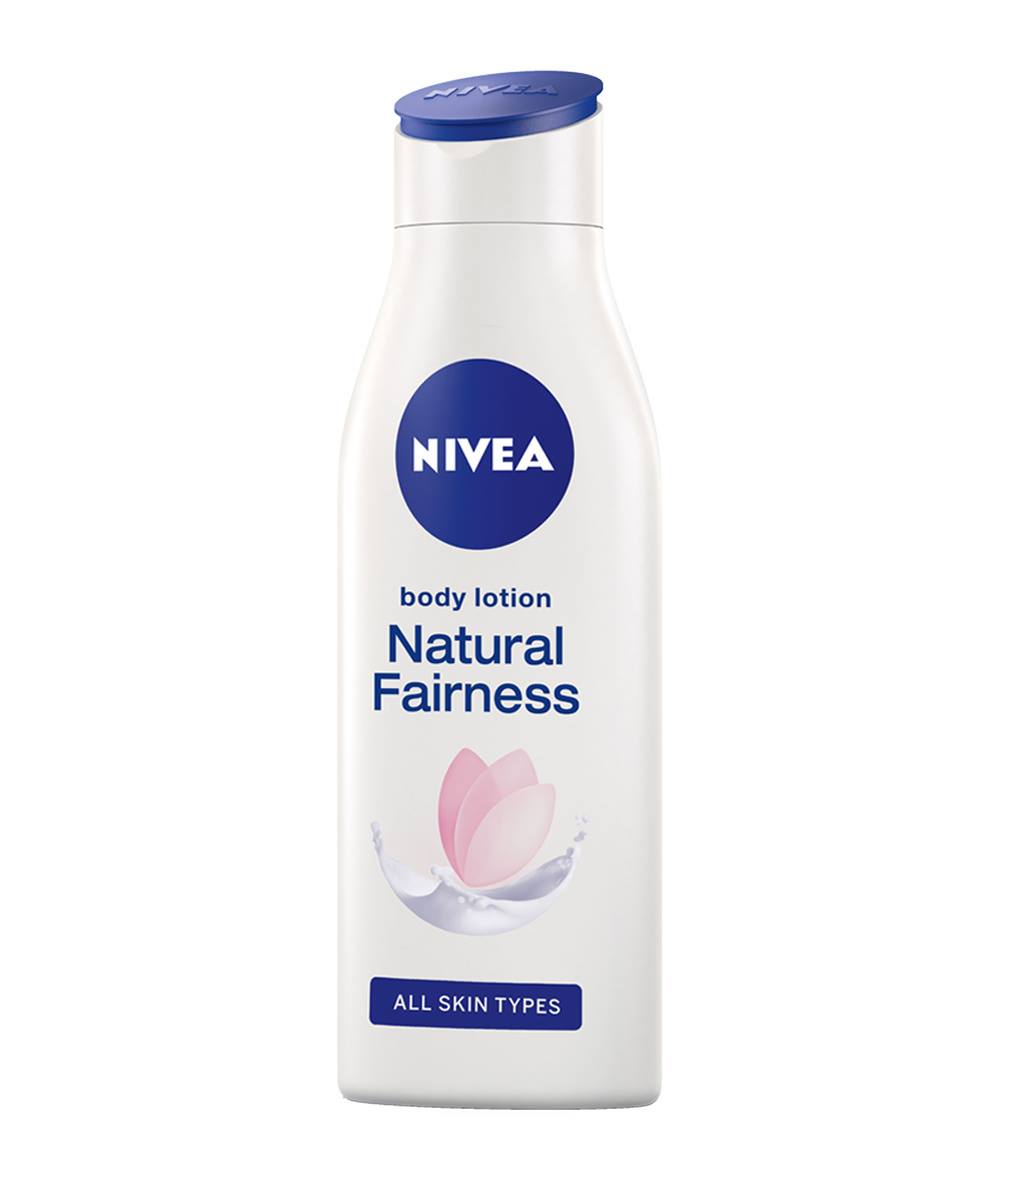 How to identify original Nivea Natural Fairness